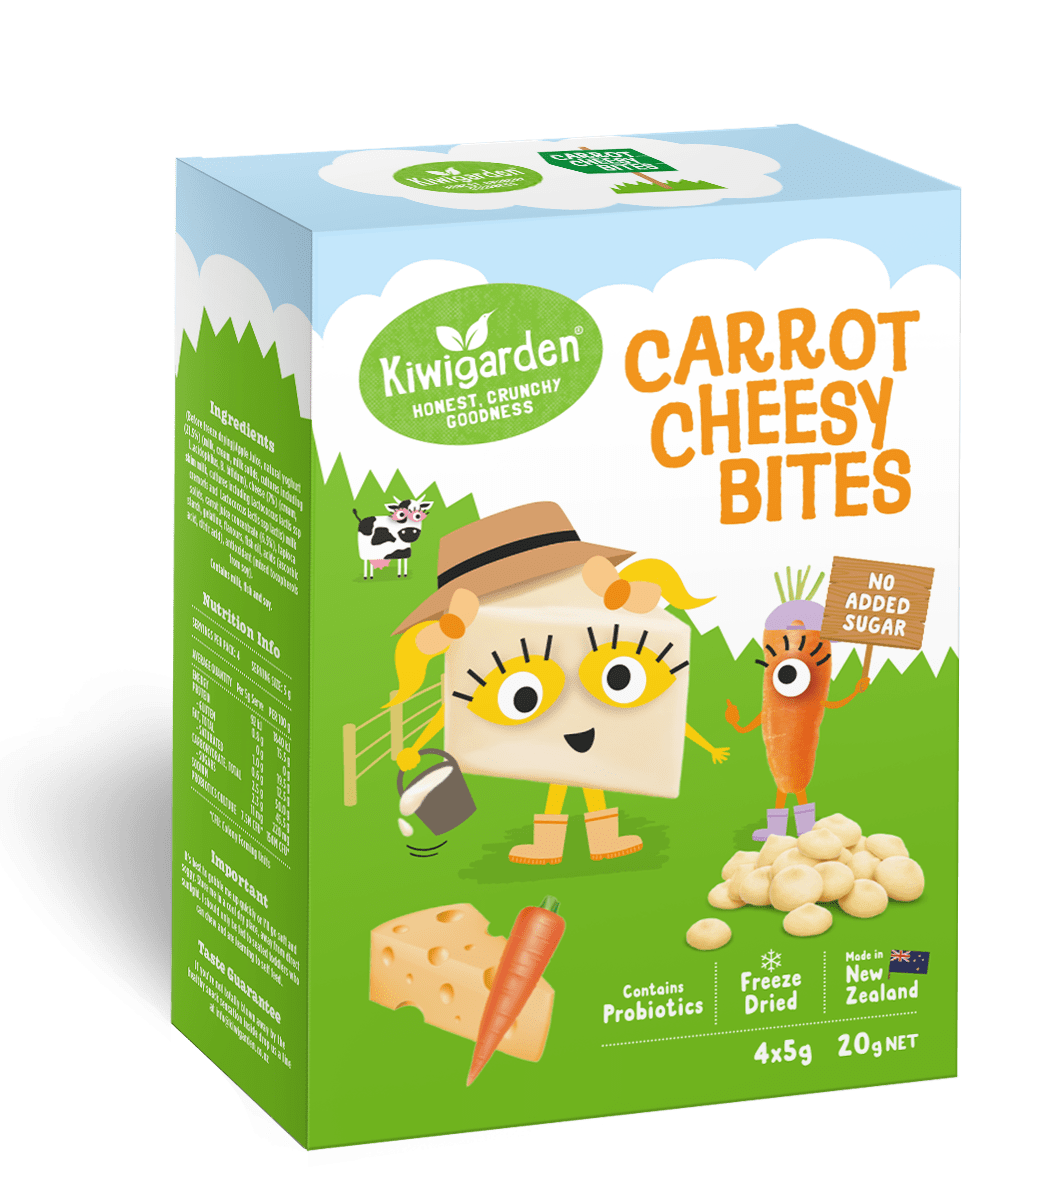 Carrot Cheesy Bites Box 20g